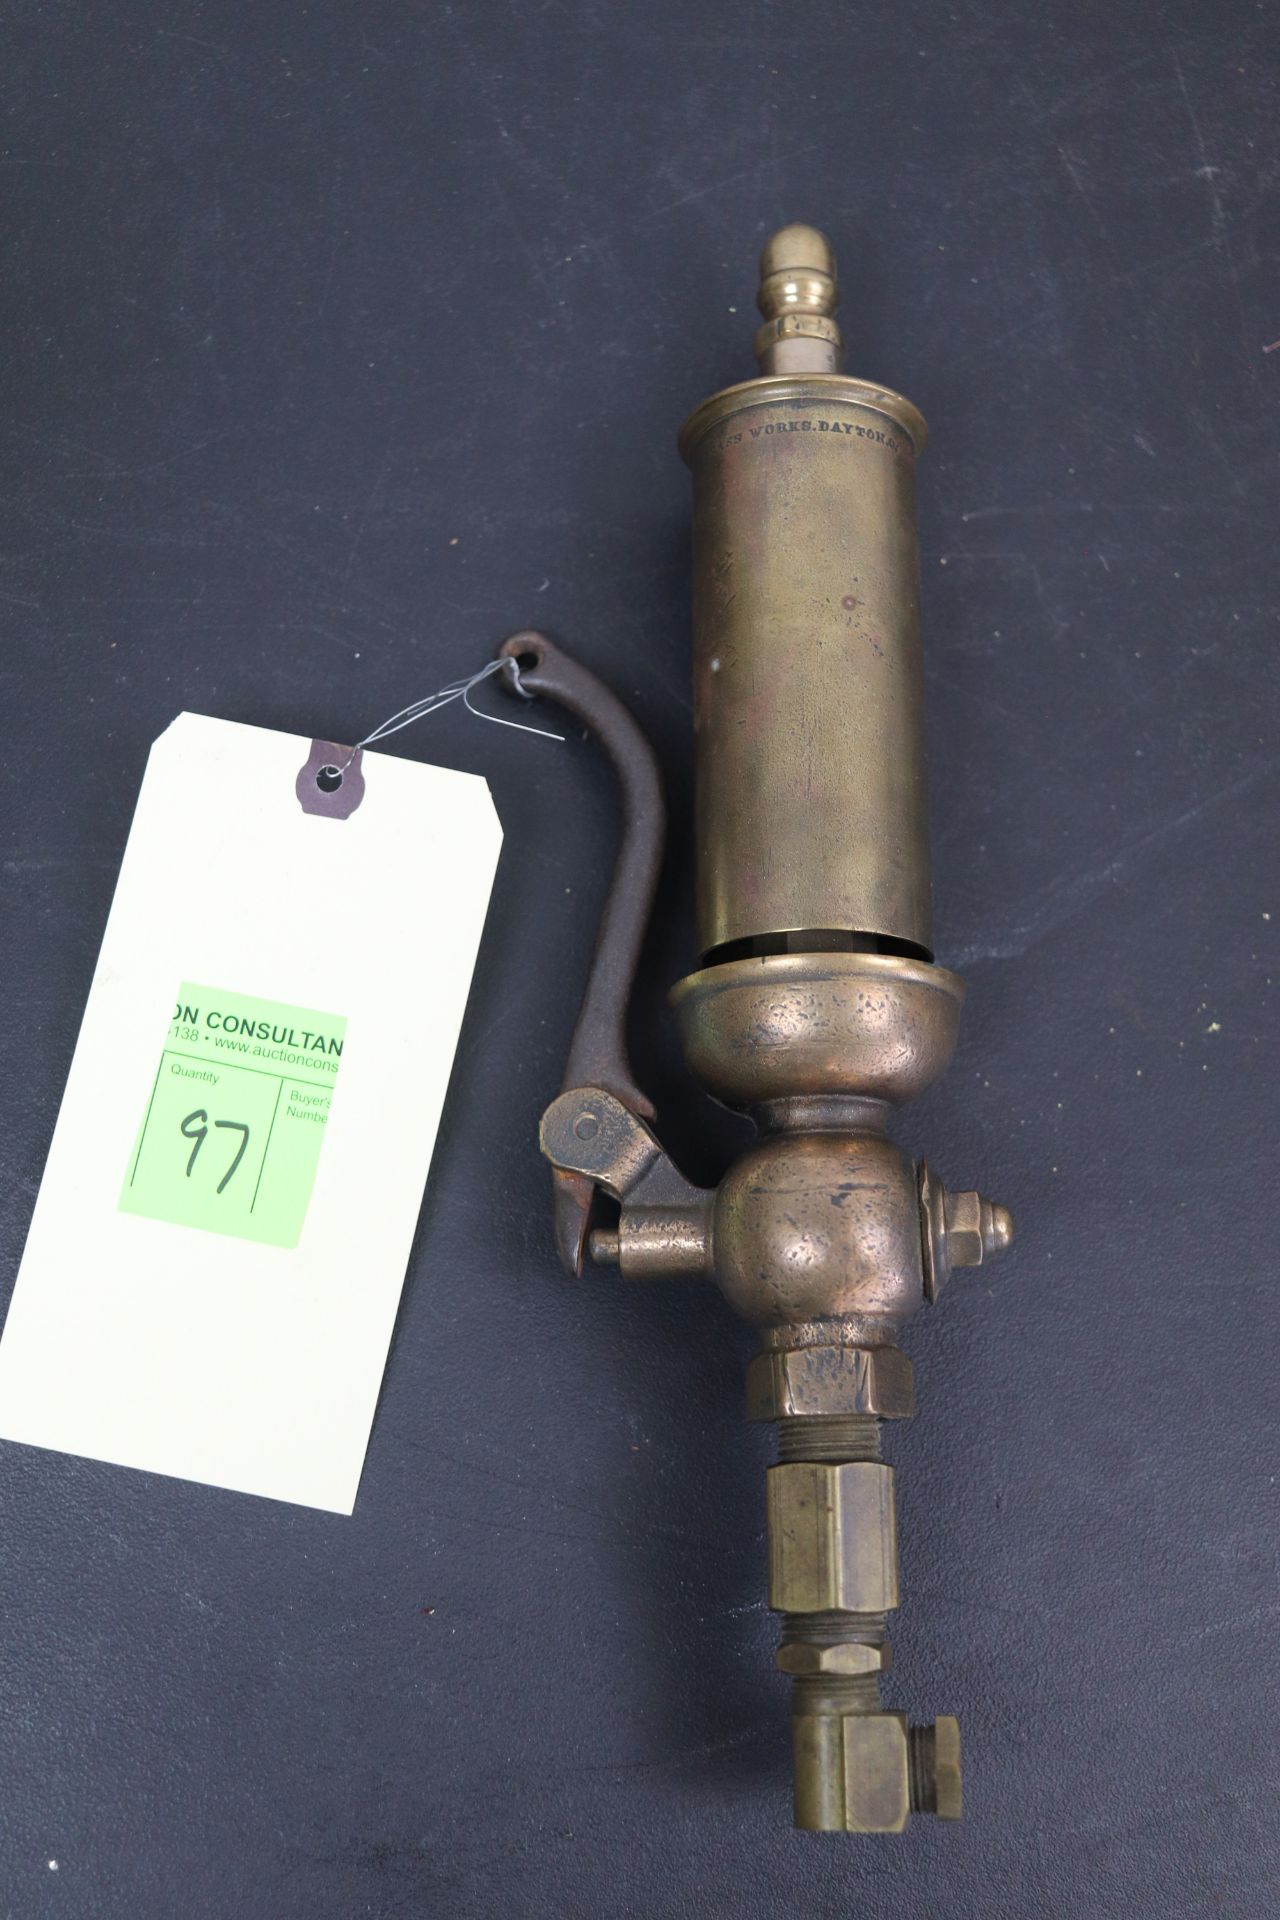 Buckeye Brass Works Dayton Ohio steam whistle, approximately 11"